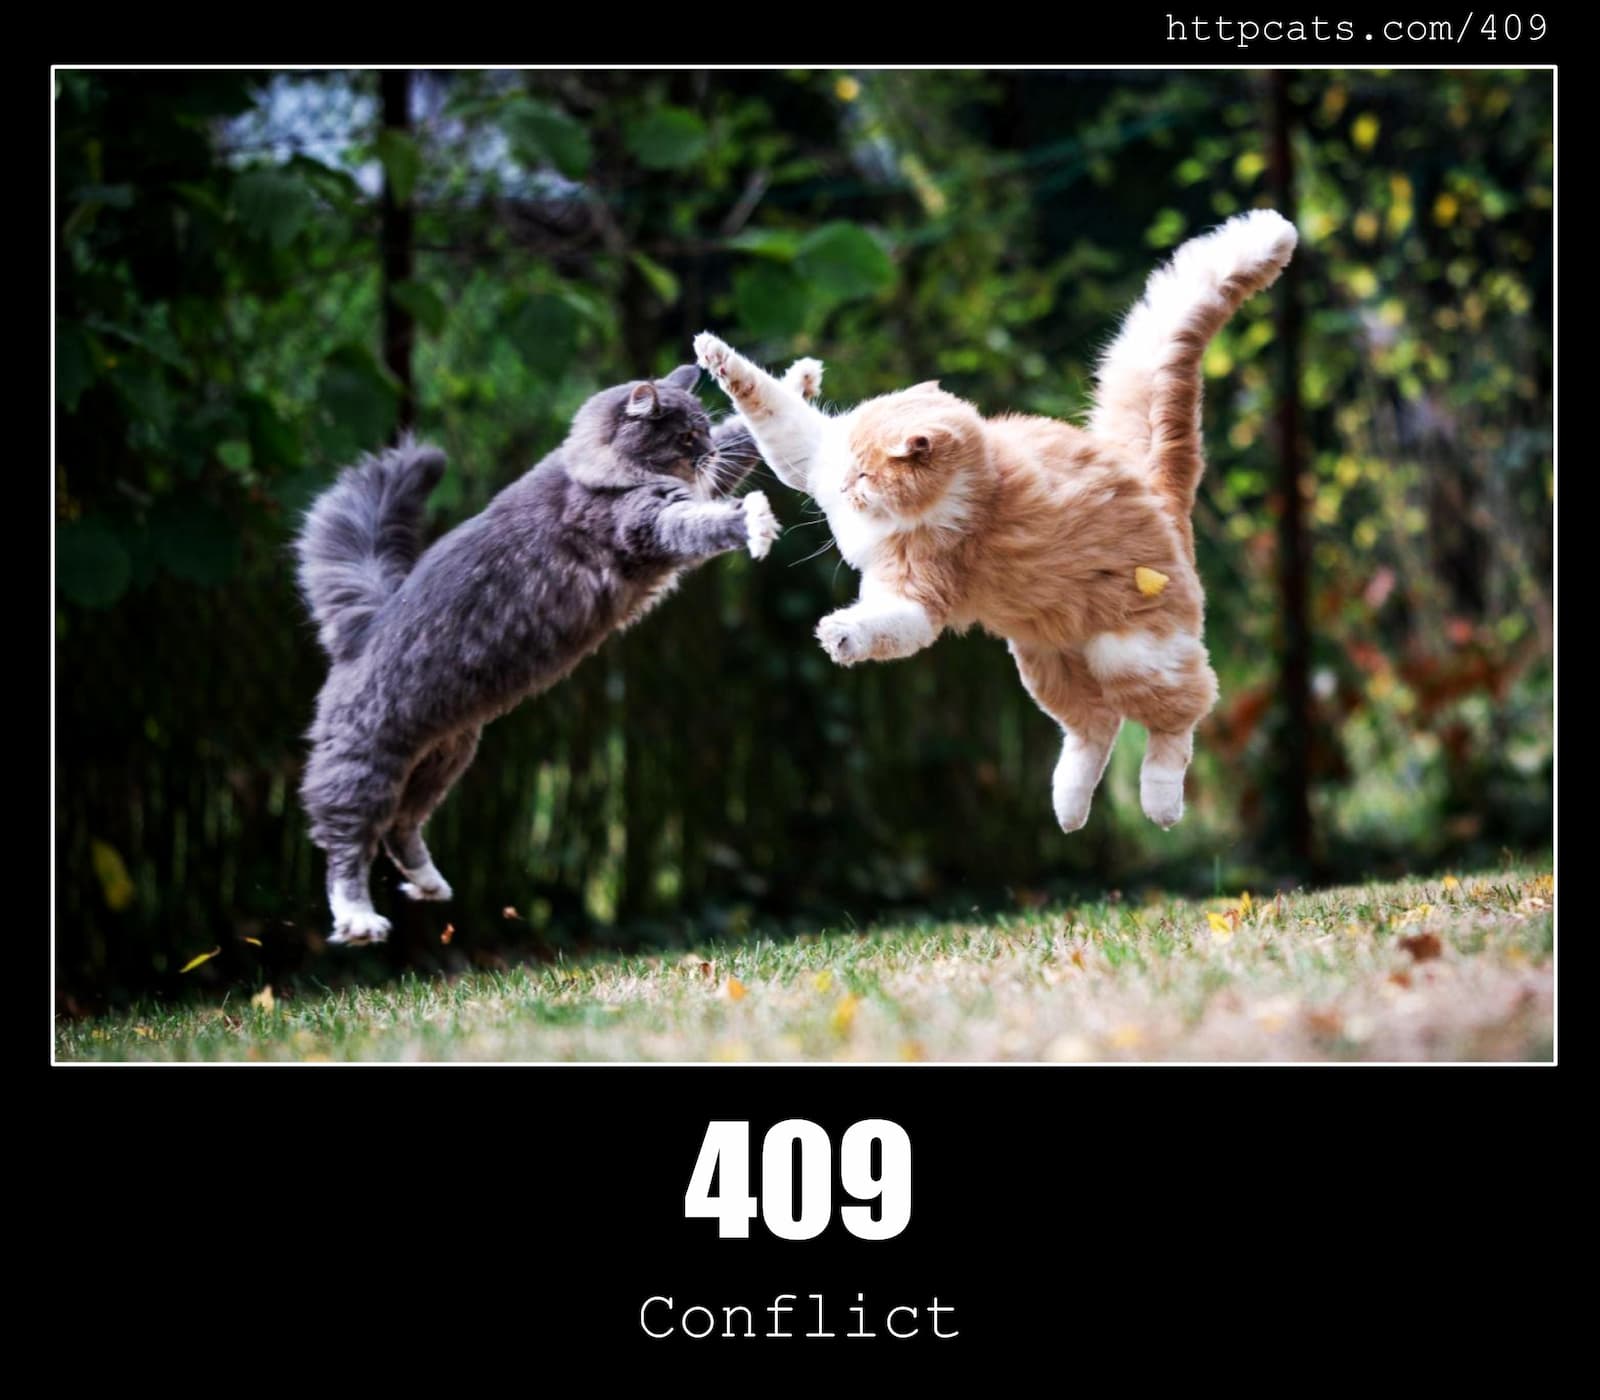 HTTP Status Code 409 Conflict & Cats